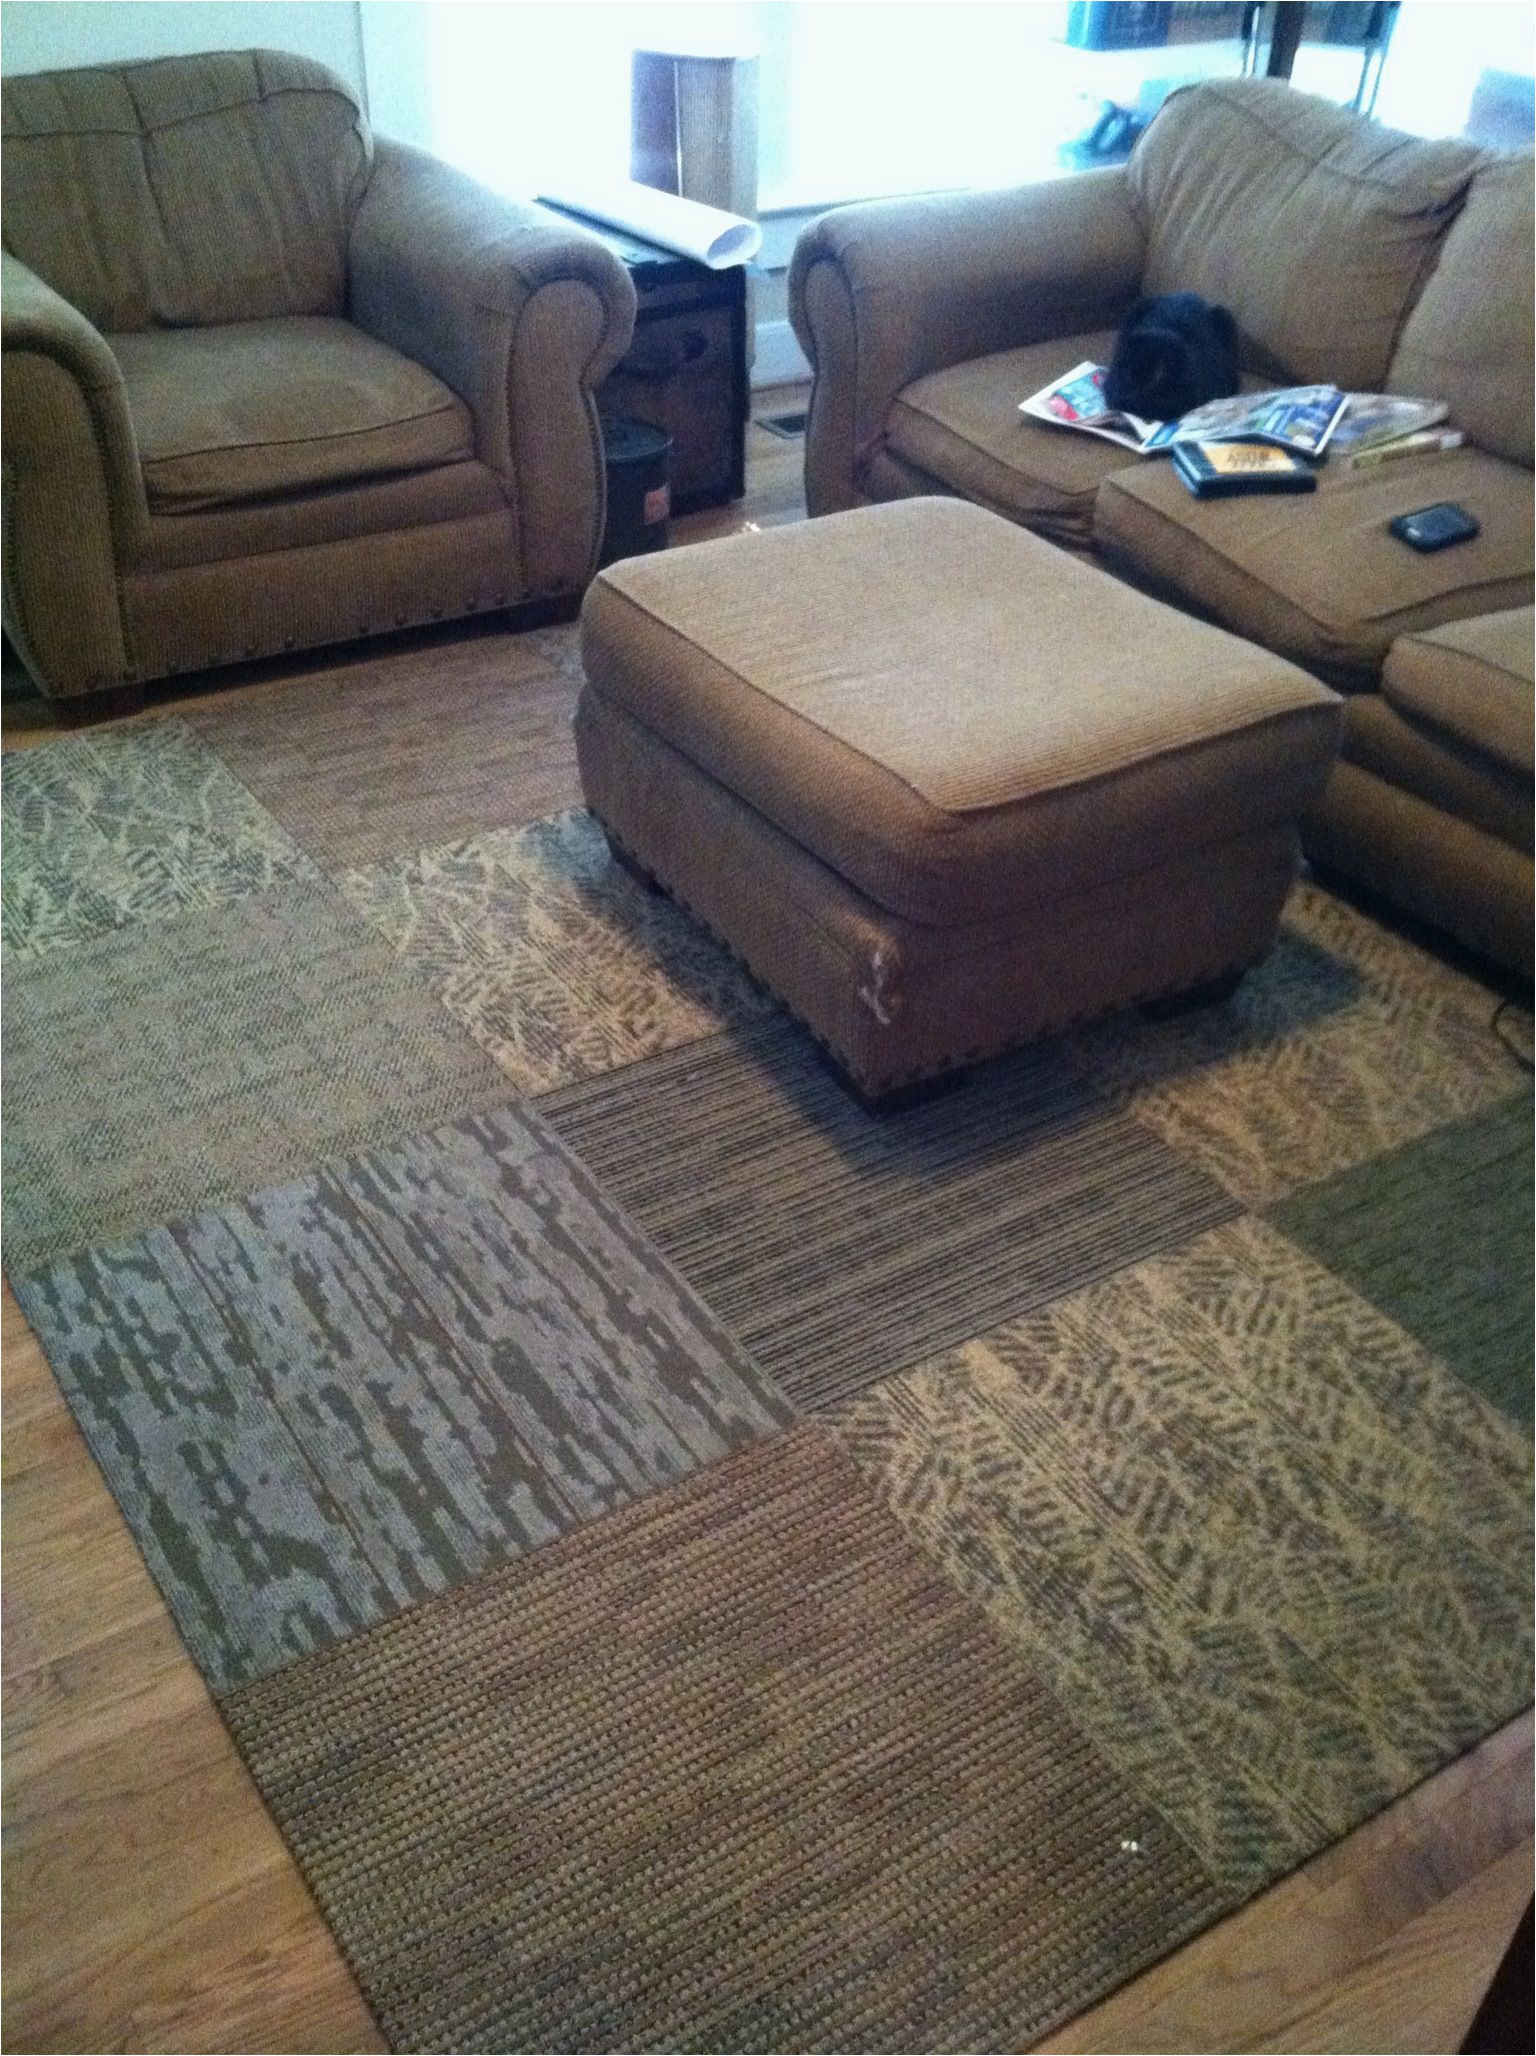 Carpet Tiles to Make area Rug Inexpensive area Rug 12 Industrial Carpet Tiles $2 Ea